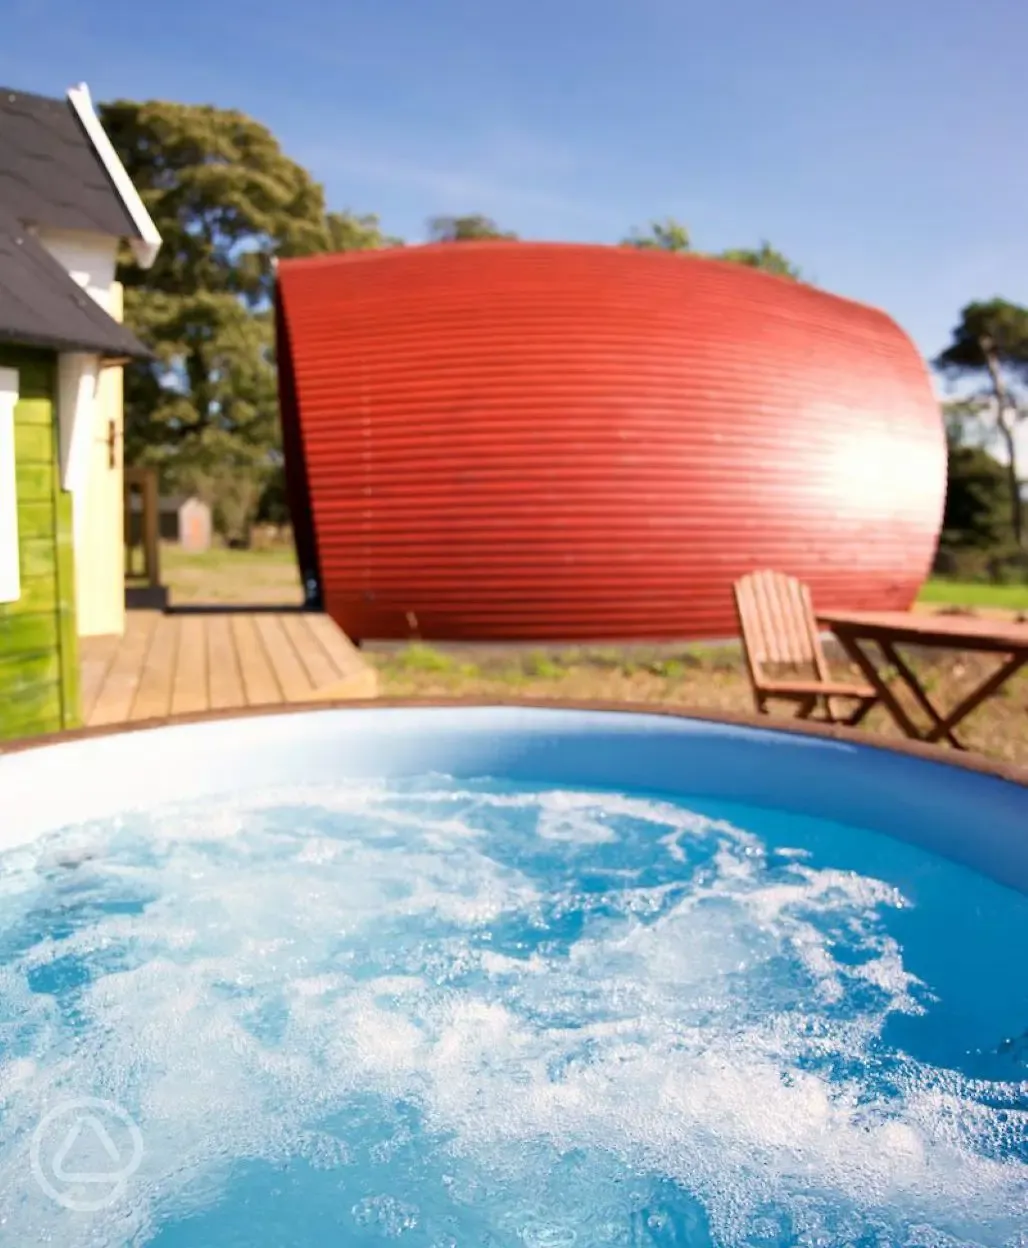 The Rowan pod hot tub